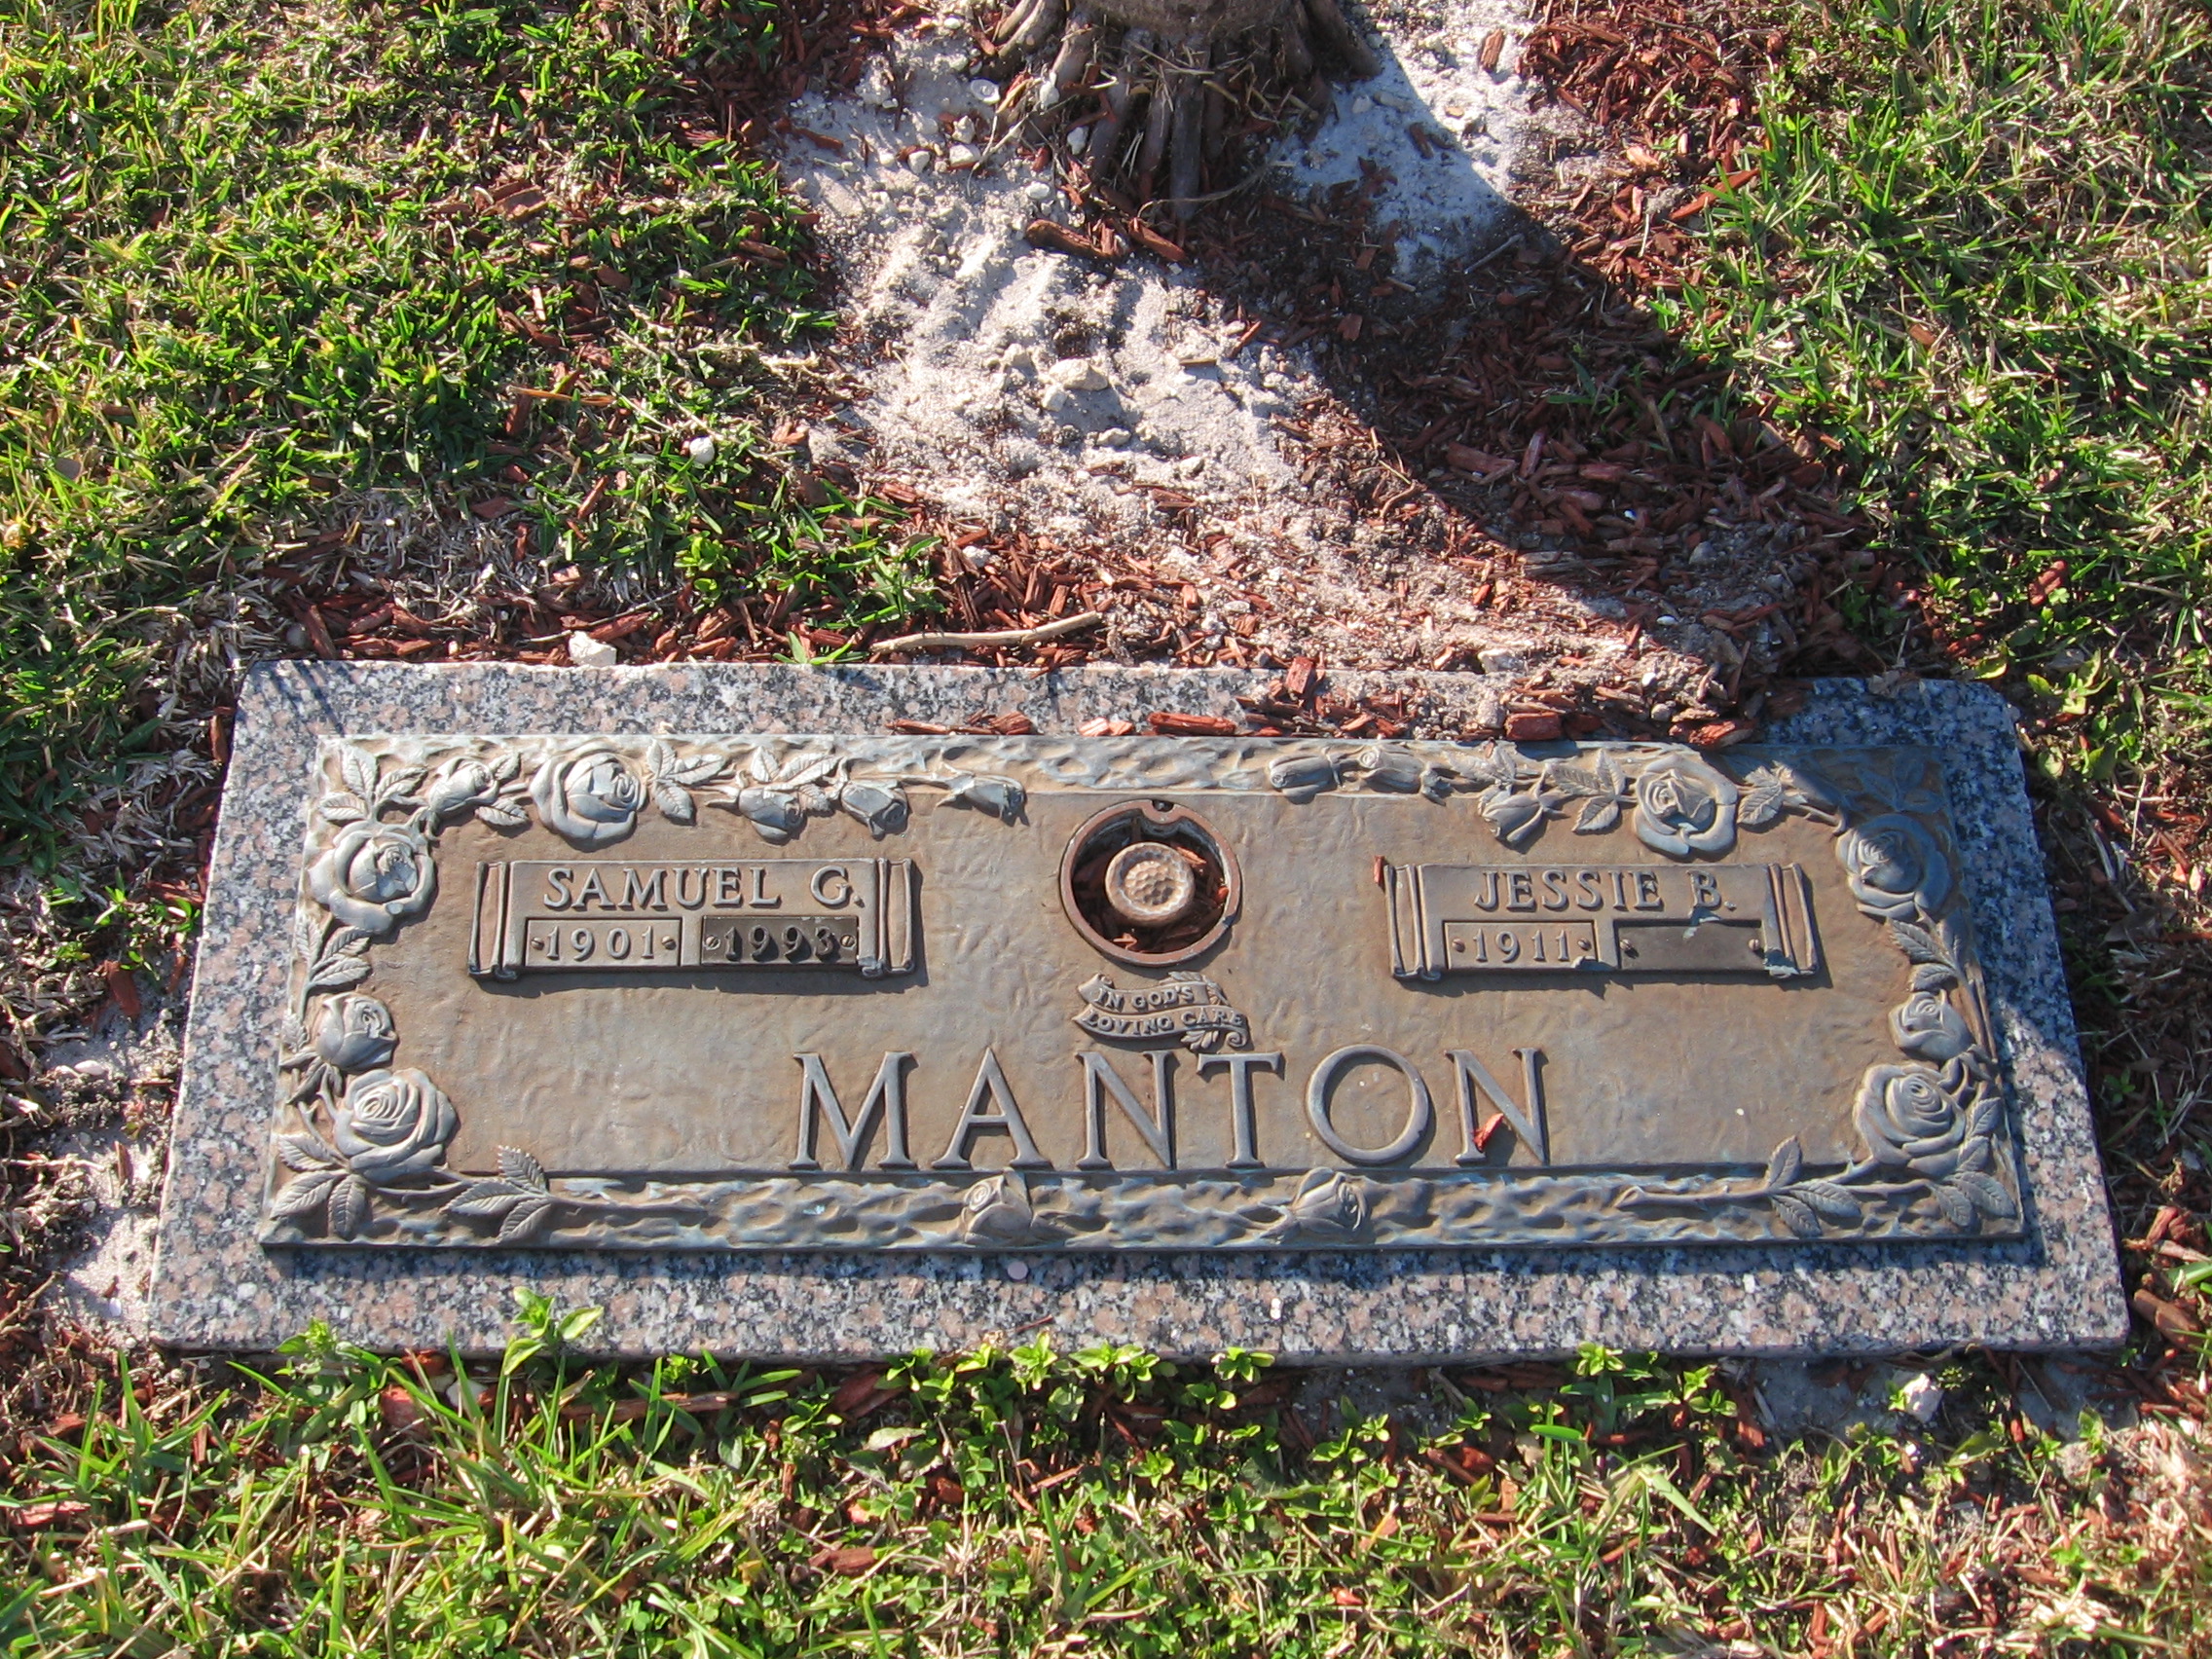 Samuel G Manton